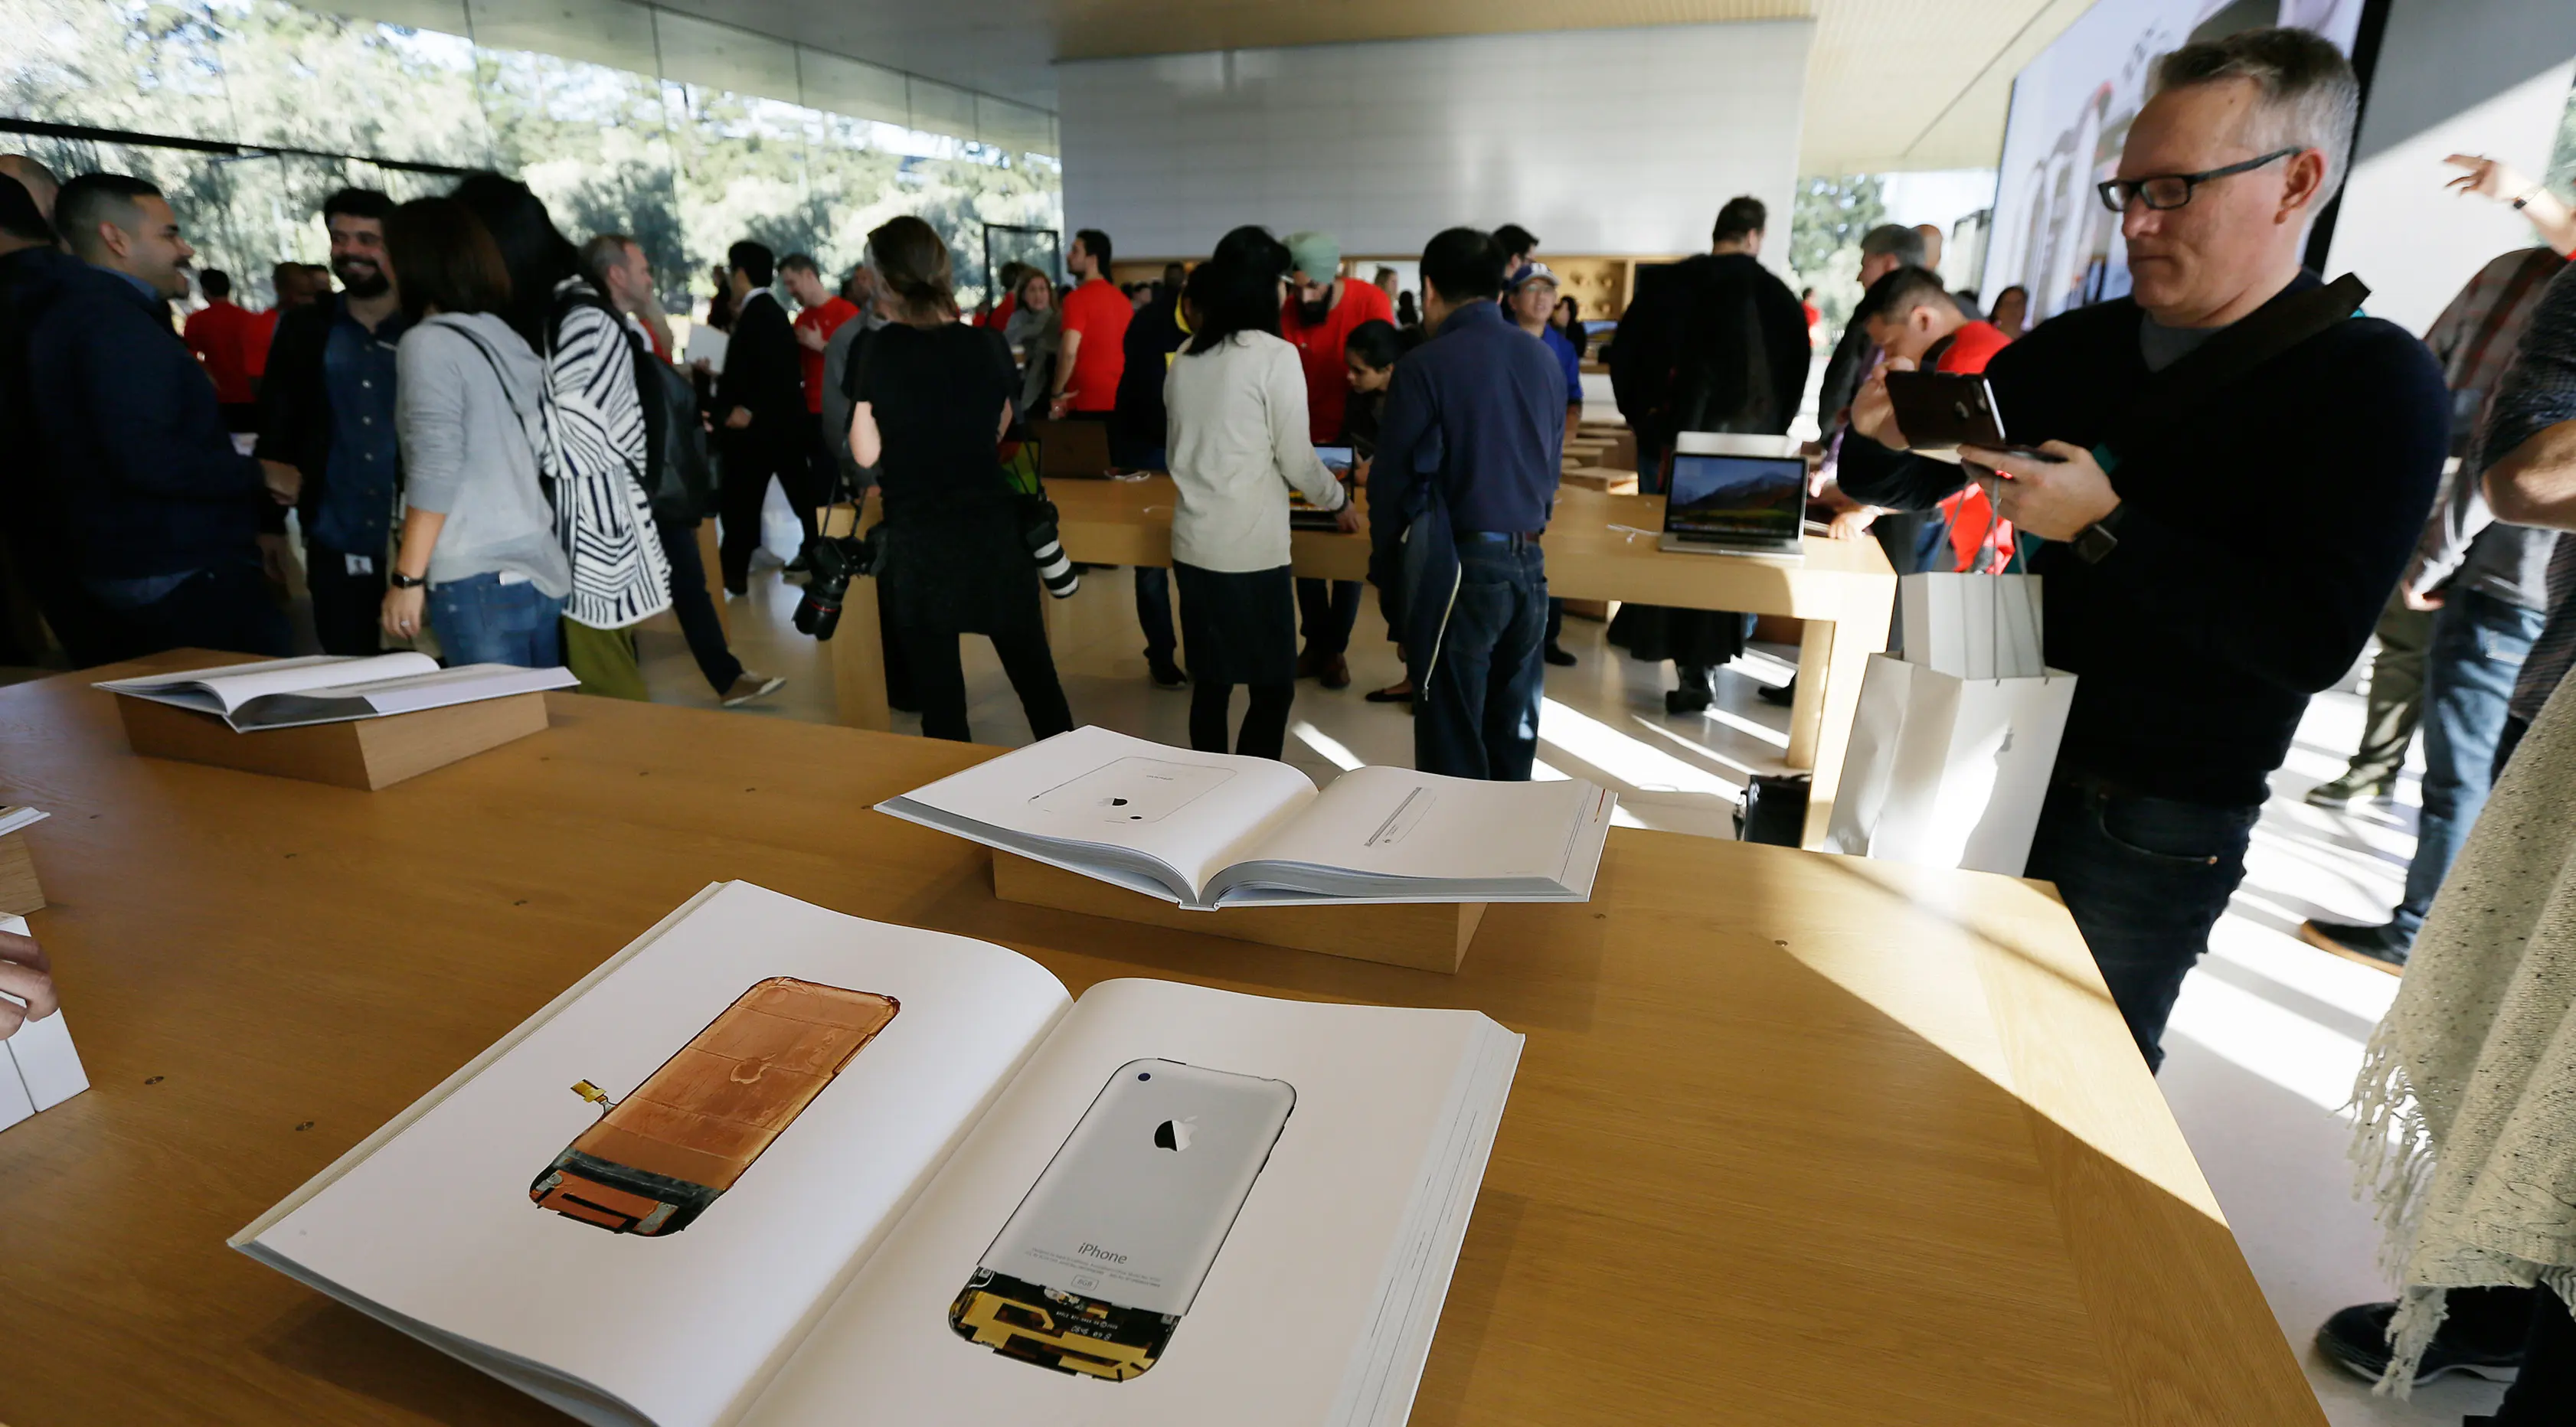 Pengunjung menghadiri pembukaan Visitor Center di kawasan Apple Park di Cupertino, California, Jumat (17/11). Di dalamnya terdapat area untuk penjualan produk-produk, seperti iPhone, iPad, Apple Watch, MacBook dan merchandise bermerek. (AP/Eric Risberg)